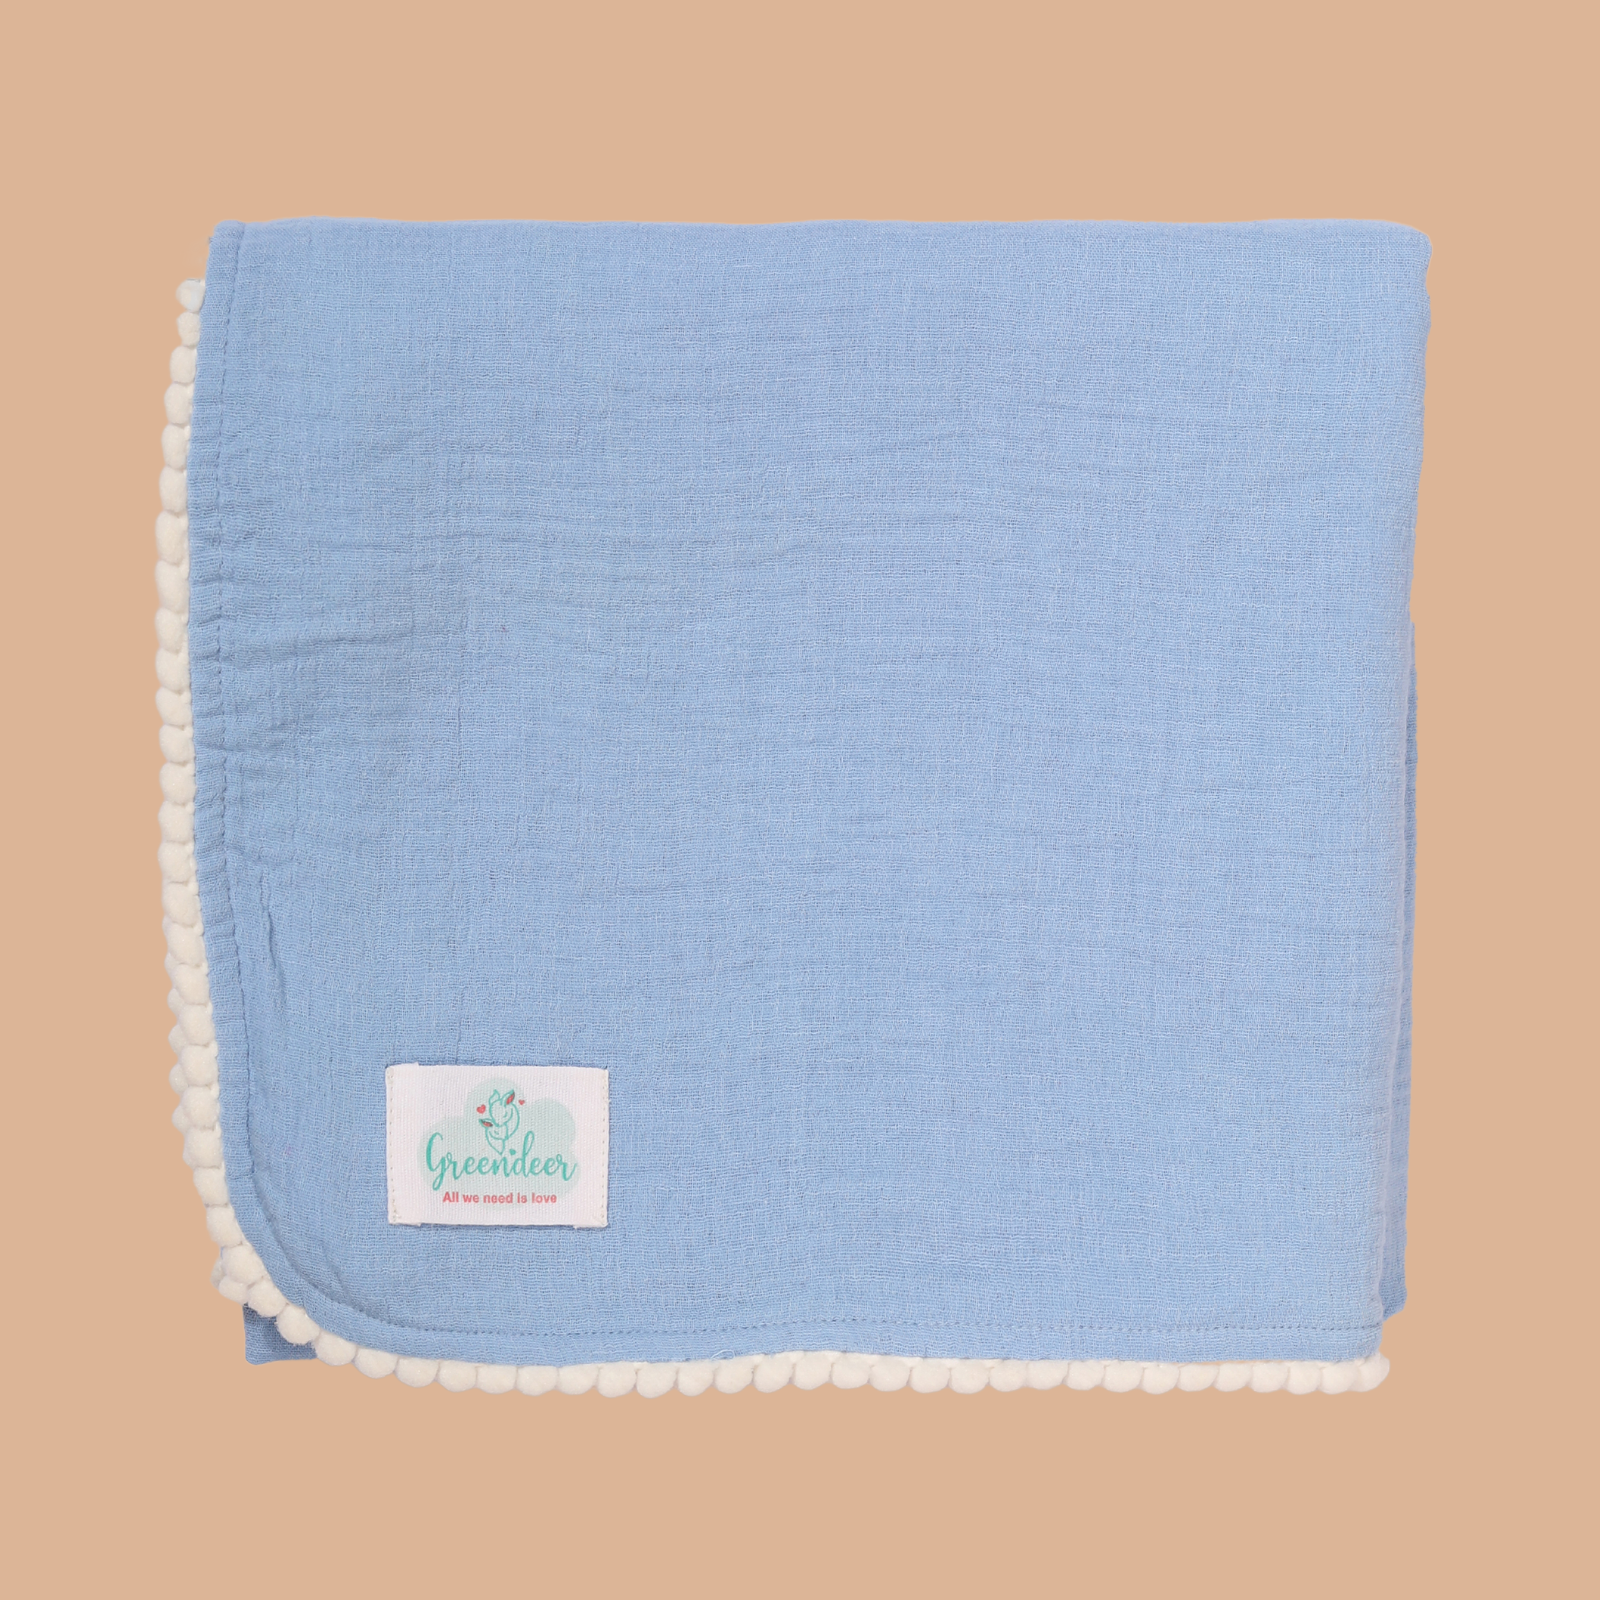 Greendeer 100% Crinkle Cotton Swaddle Cloth - Pack of 3